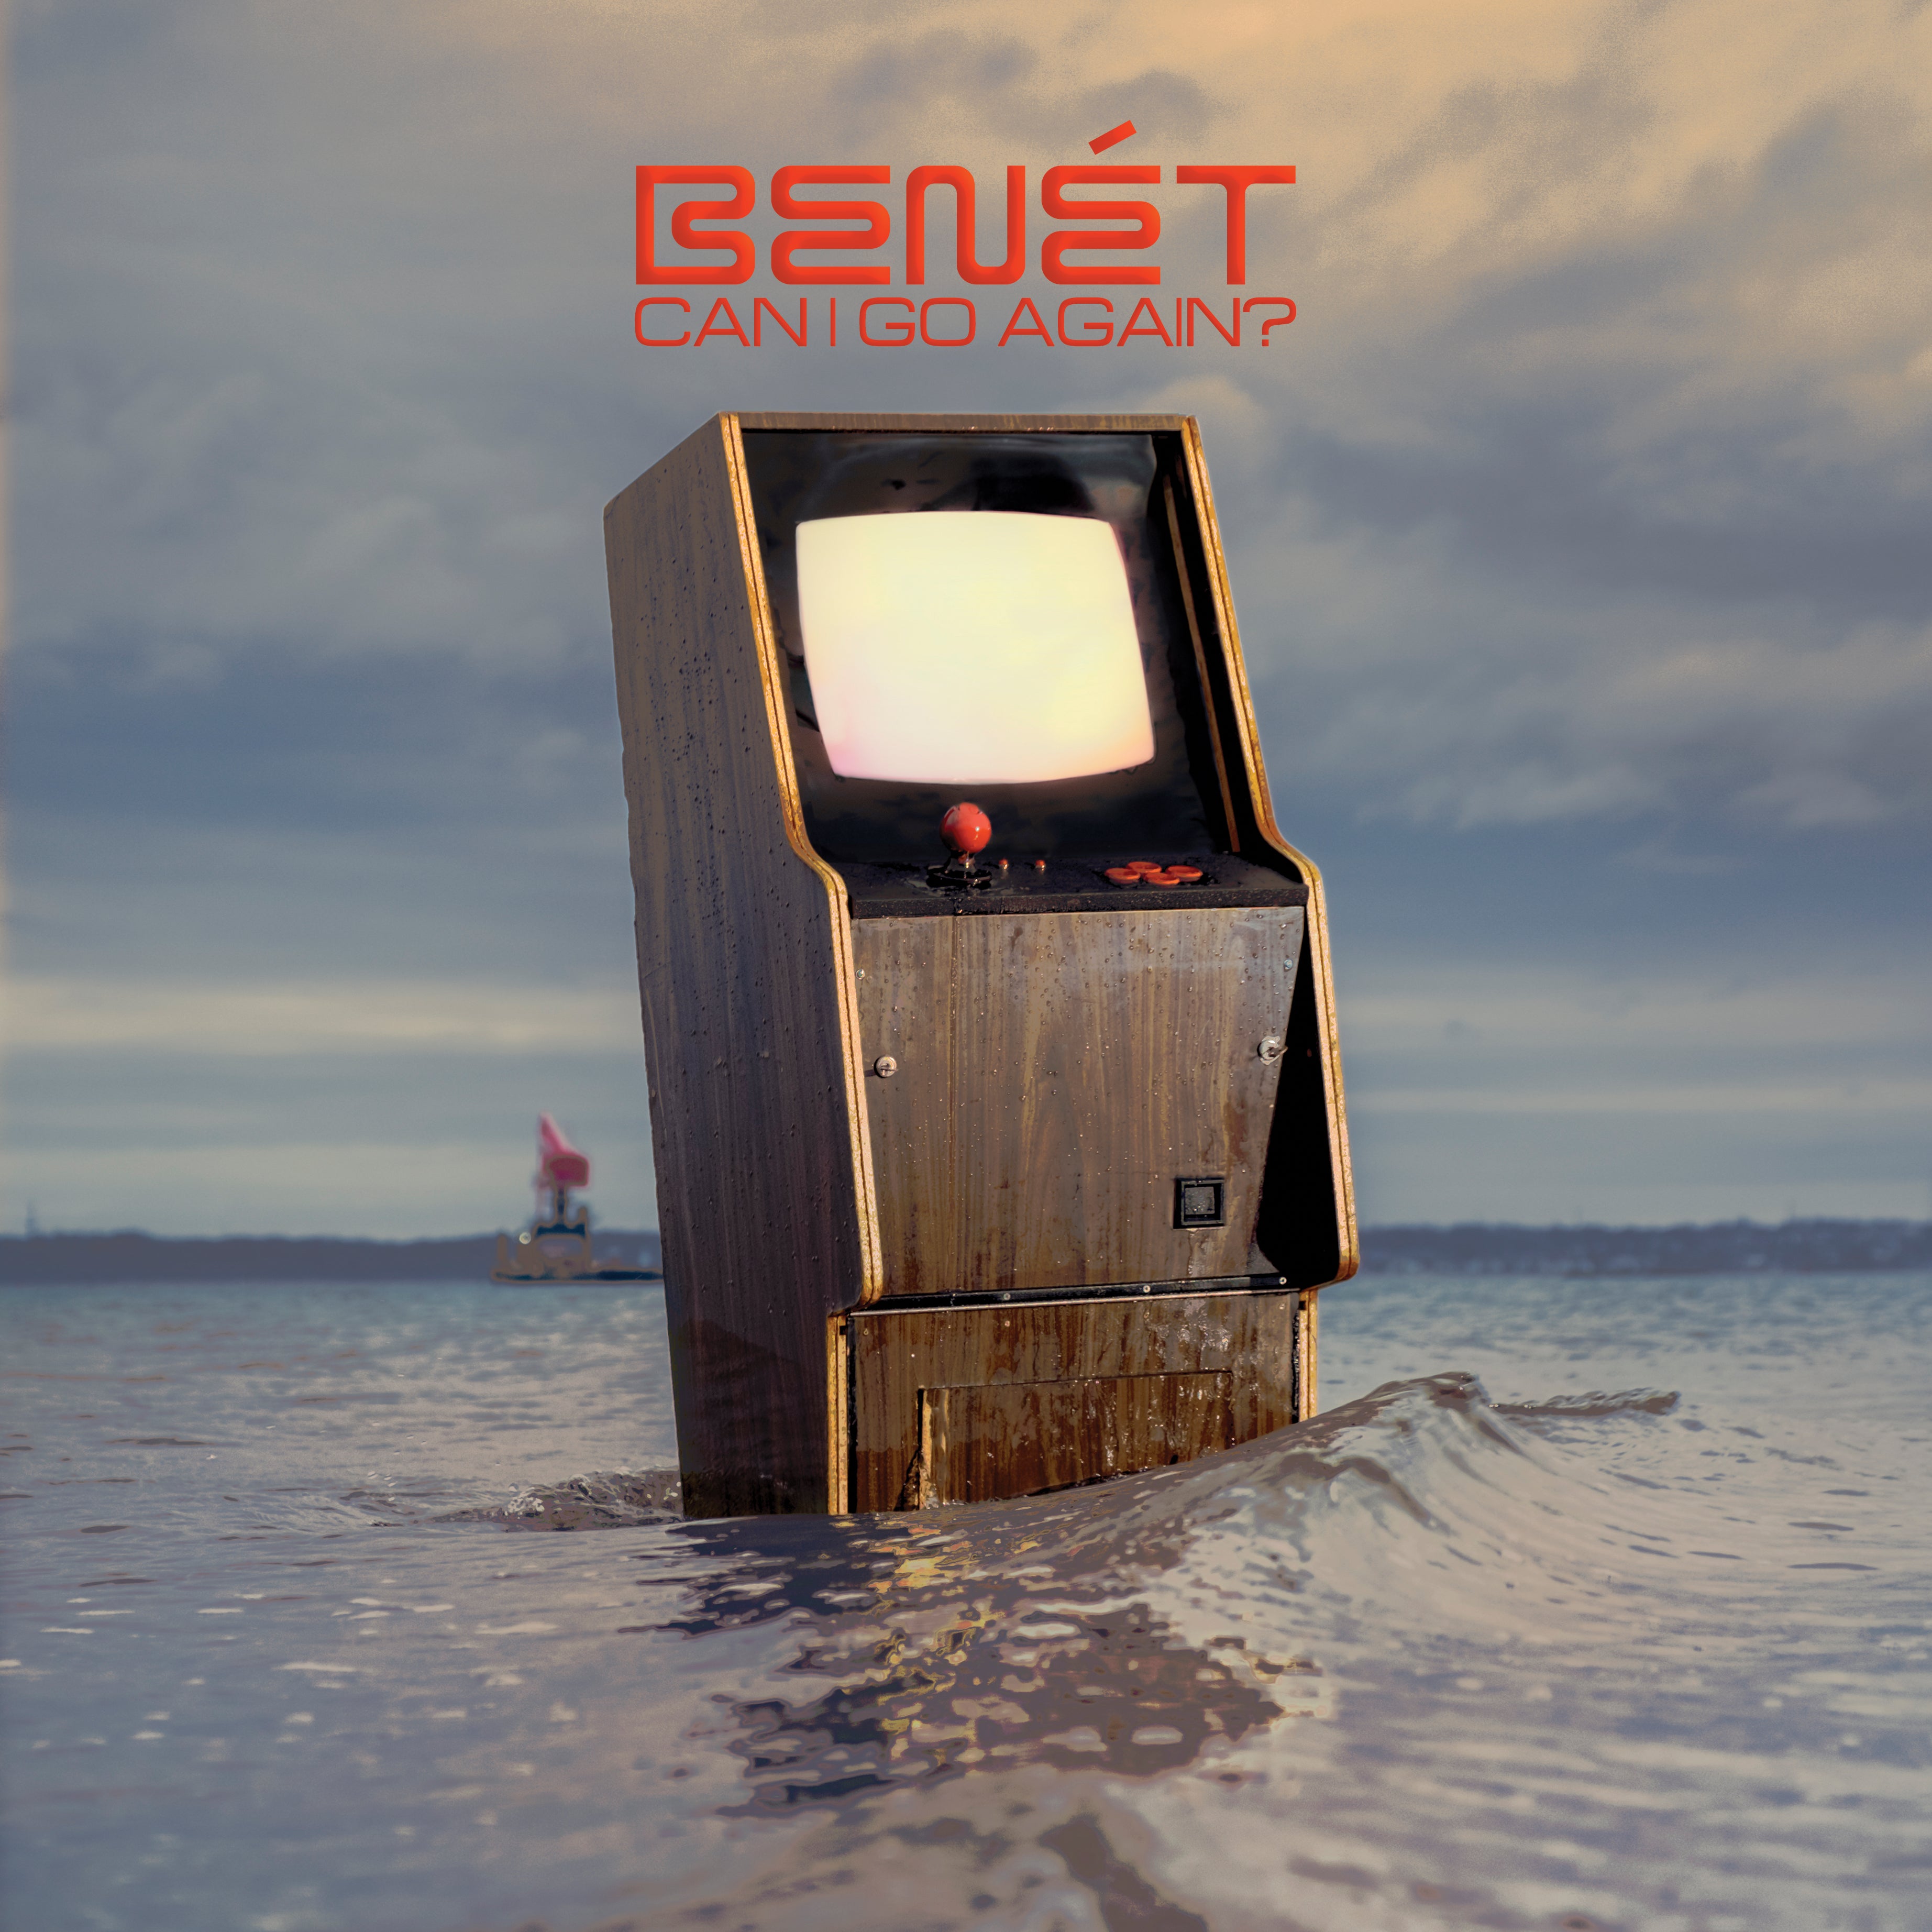 Benét's Debut Album, 'Can I go again?' releases Sept. 22nd!